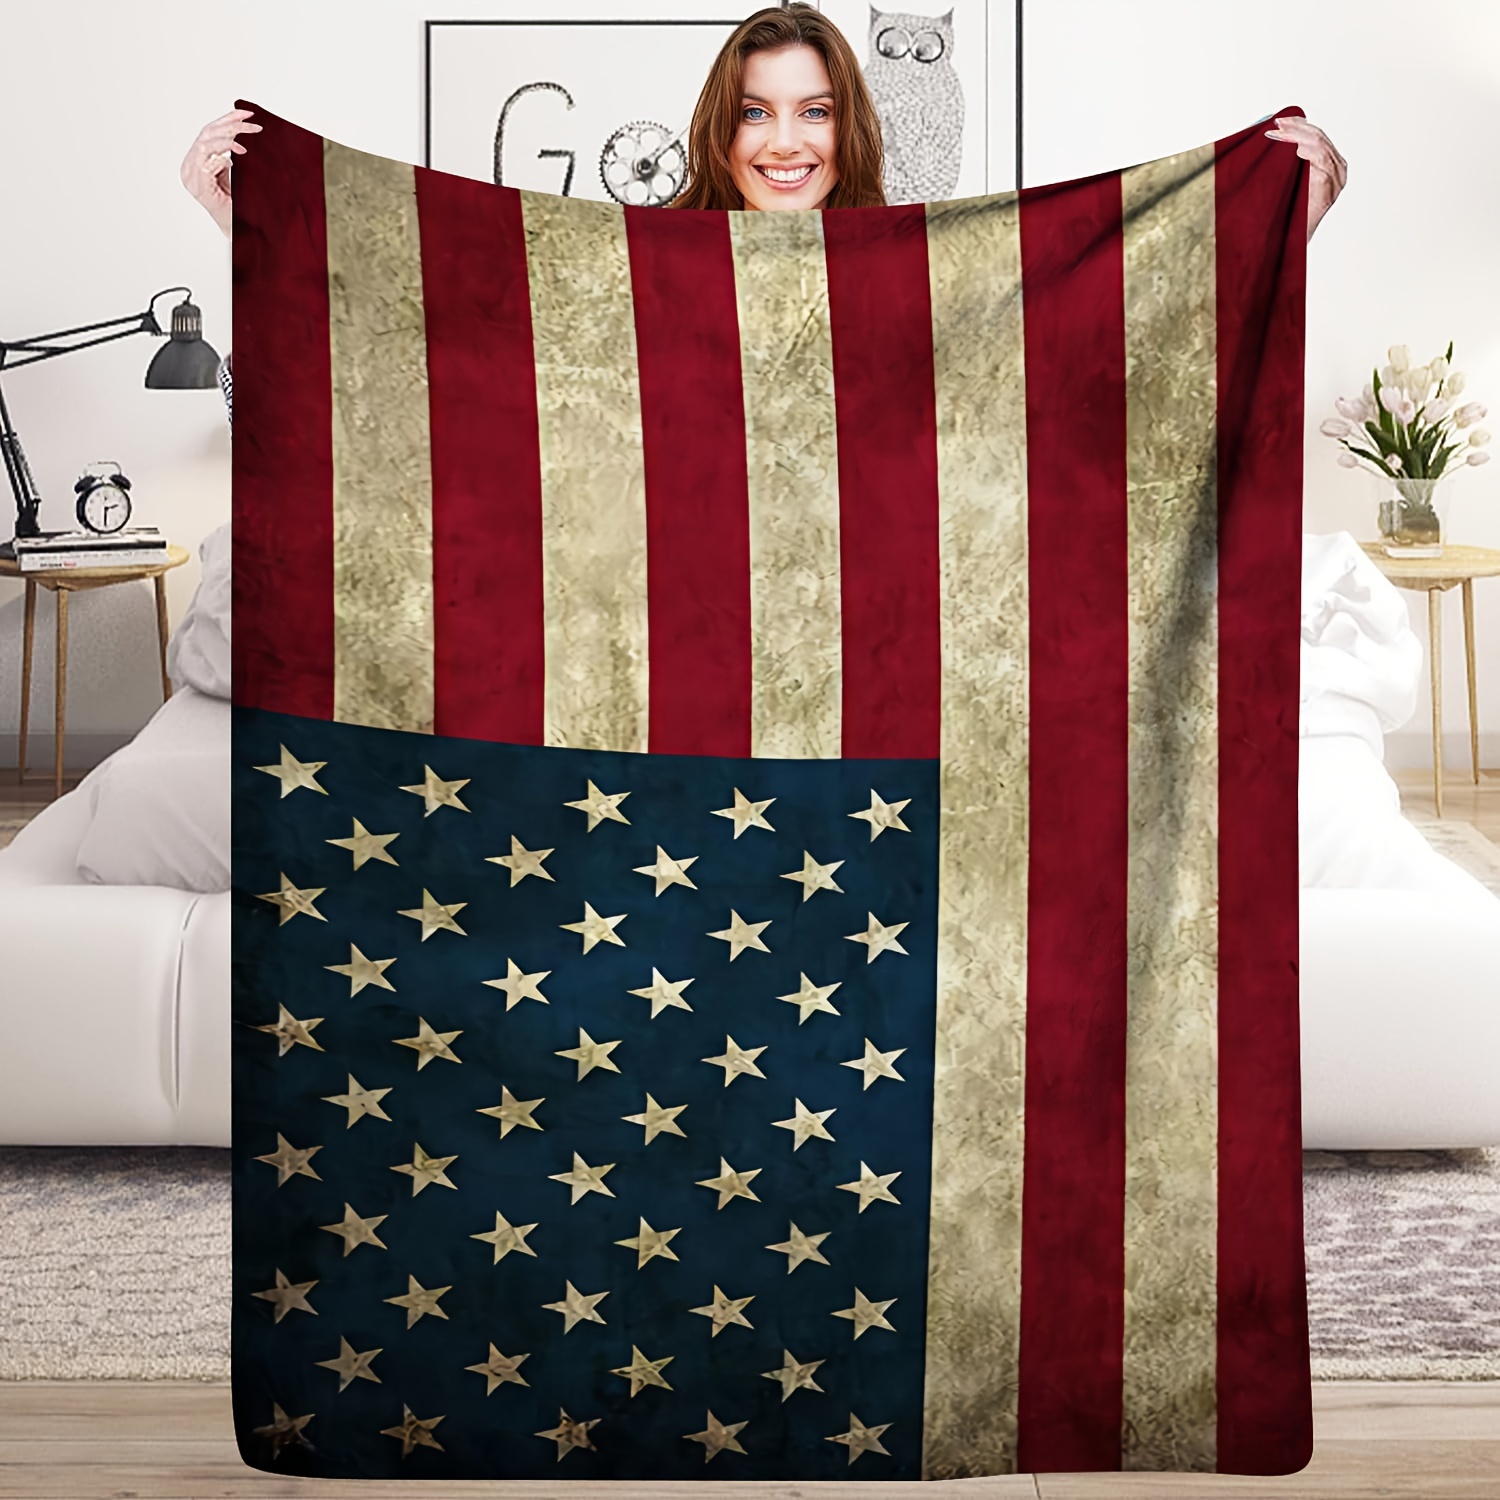 

Soft Flannel American Flag Throw Blanket - Perfect Friends, Cozy All-season Bedding Flannel Blanket